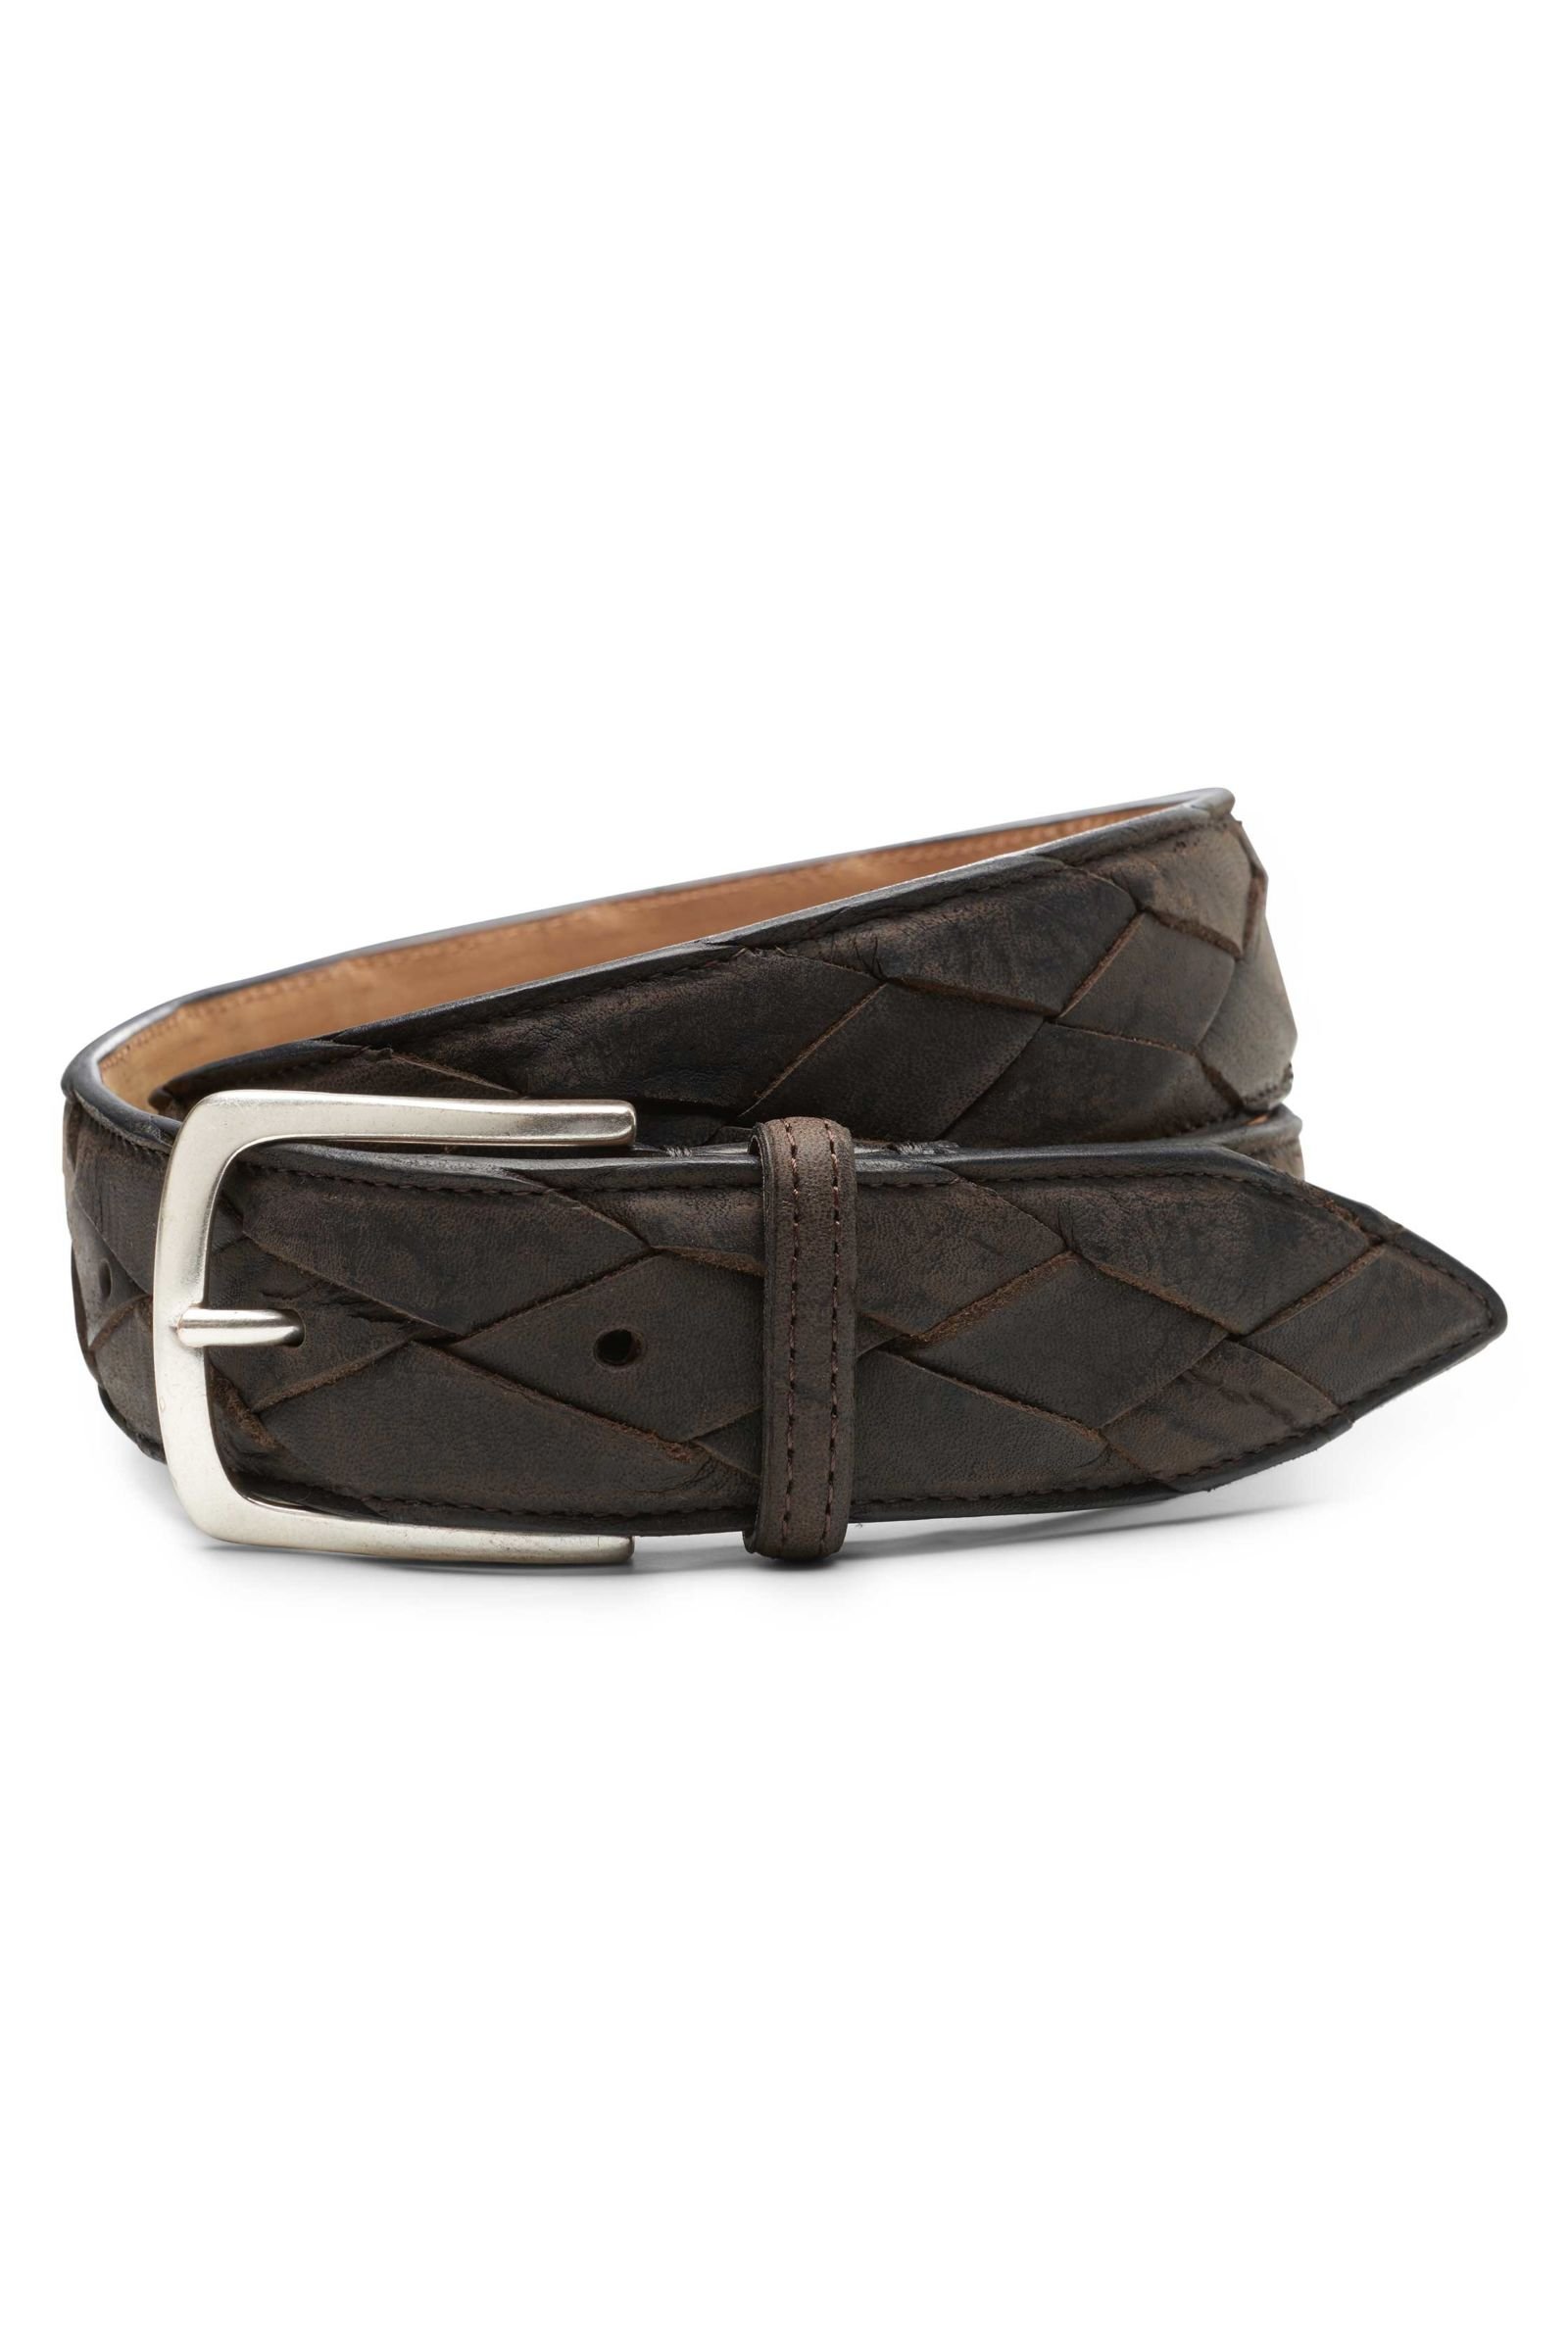 Antelope leather belt dark brown